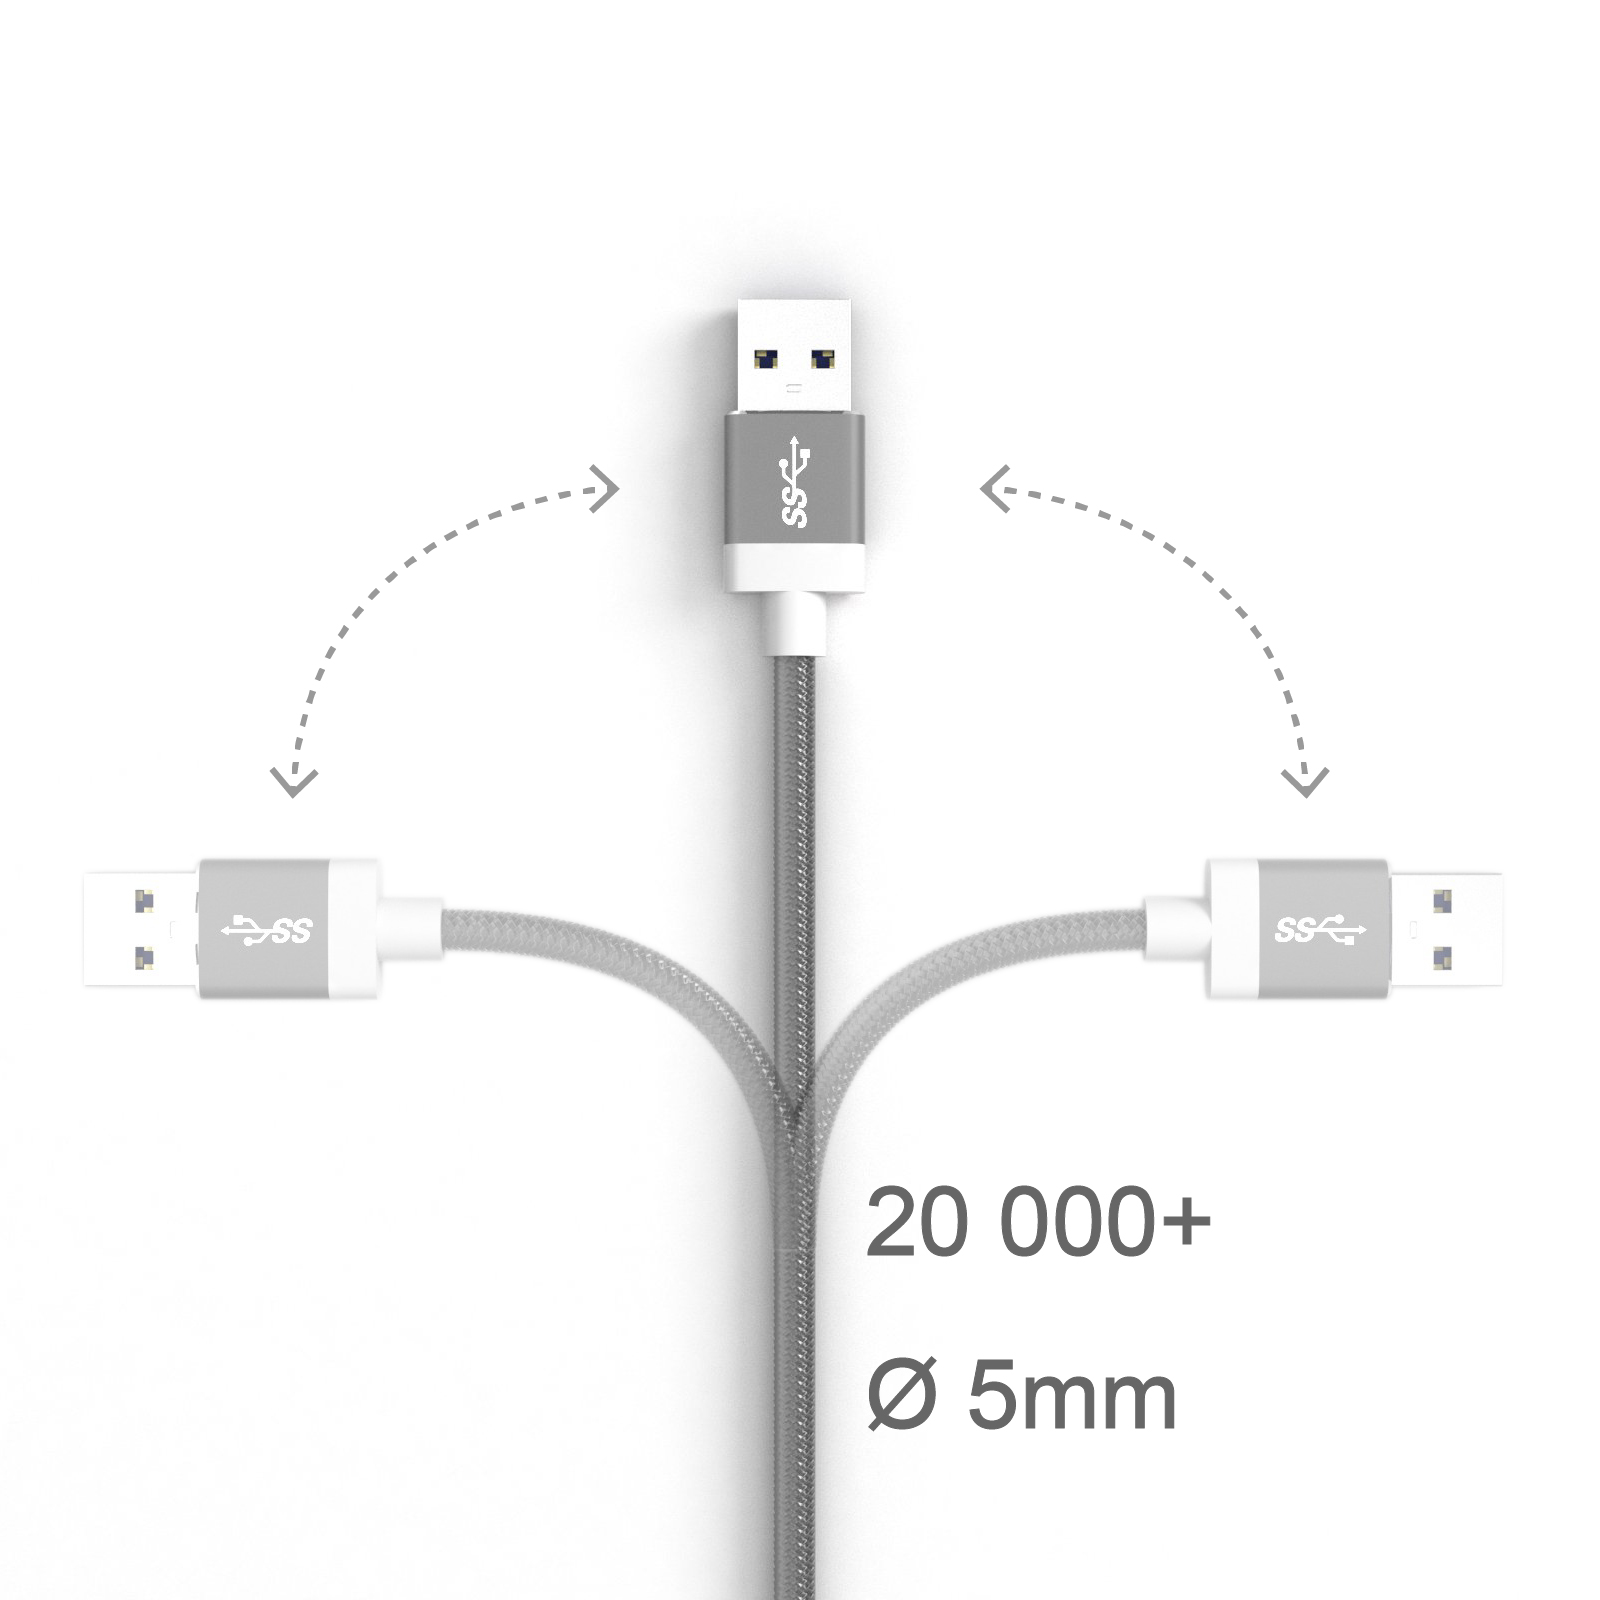 Kabel K55 TUPOWER 3.0 USB 0,5m USB Verbindungskabel